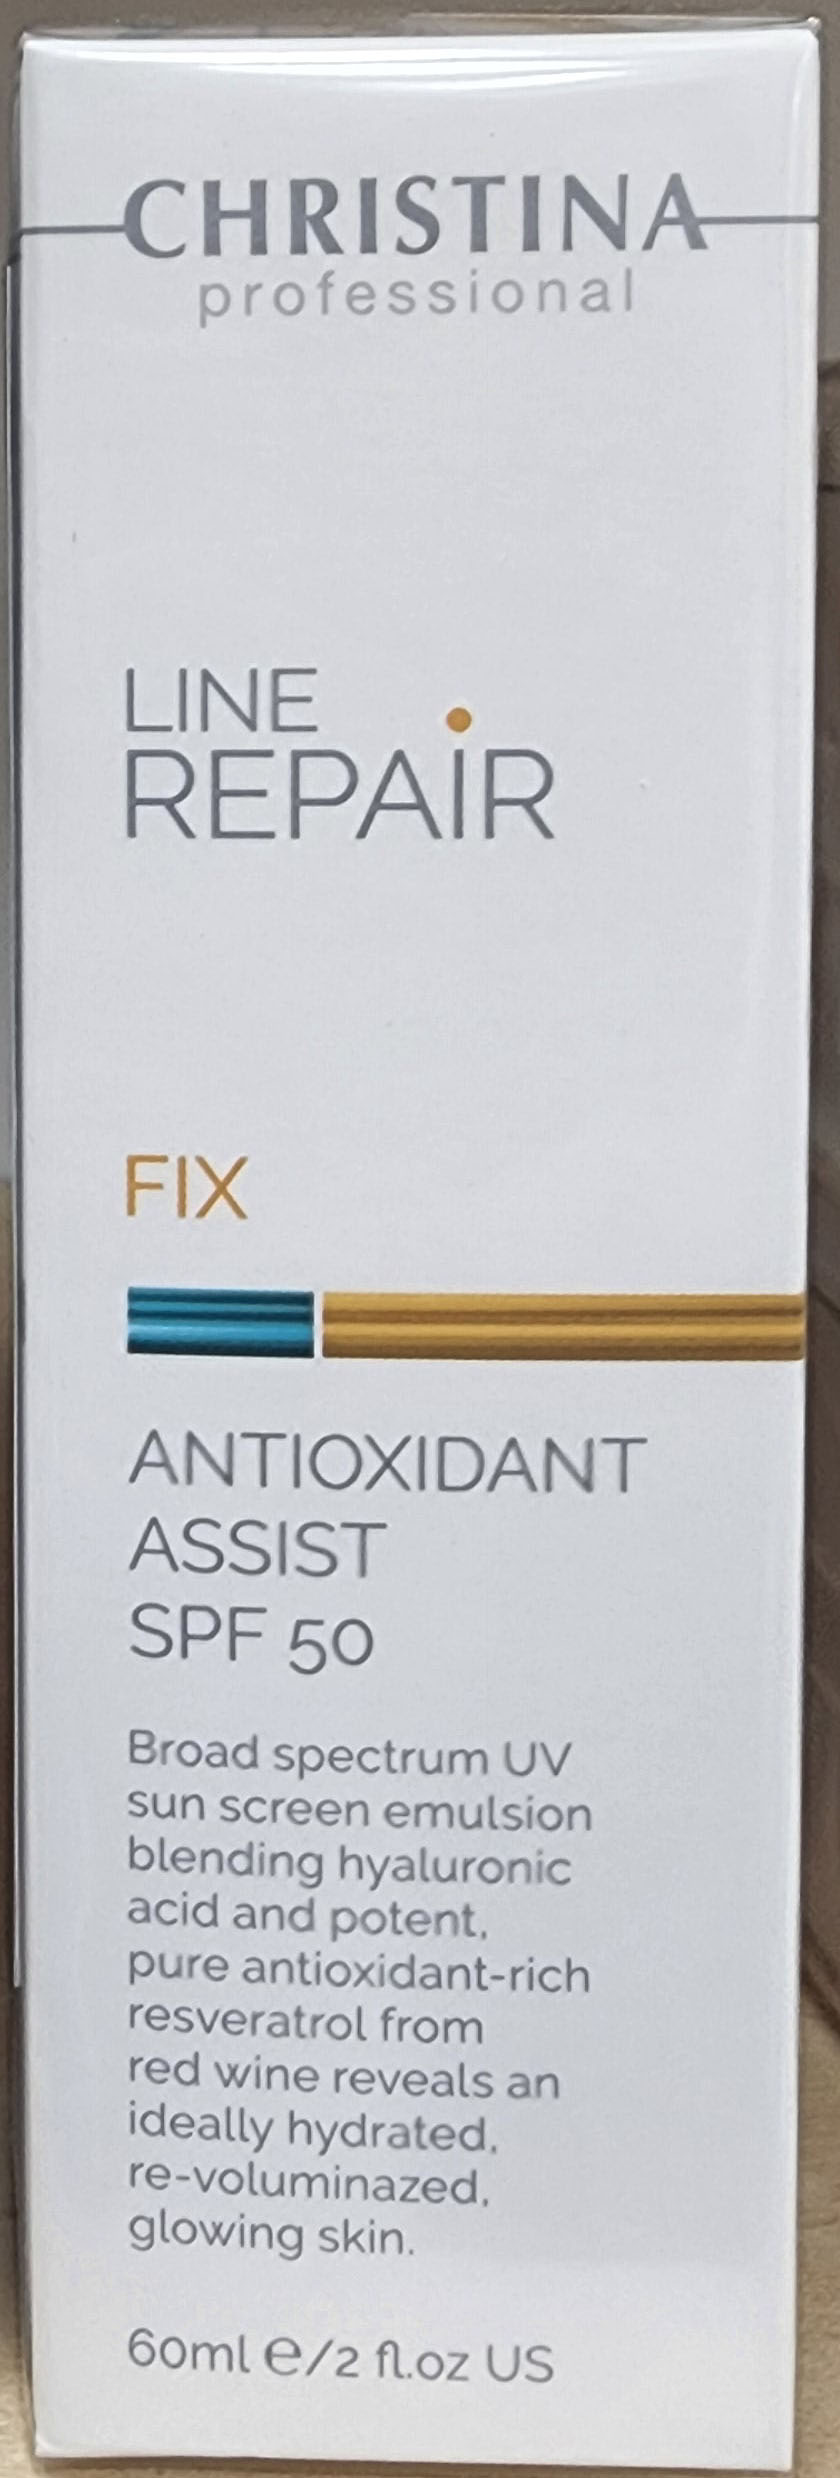 Christina Line Repair - Fix - Antioxidant Assist SPF 50 60ml